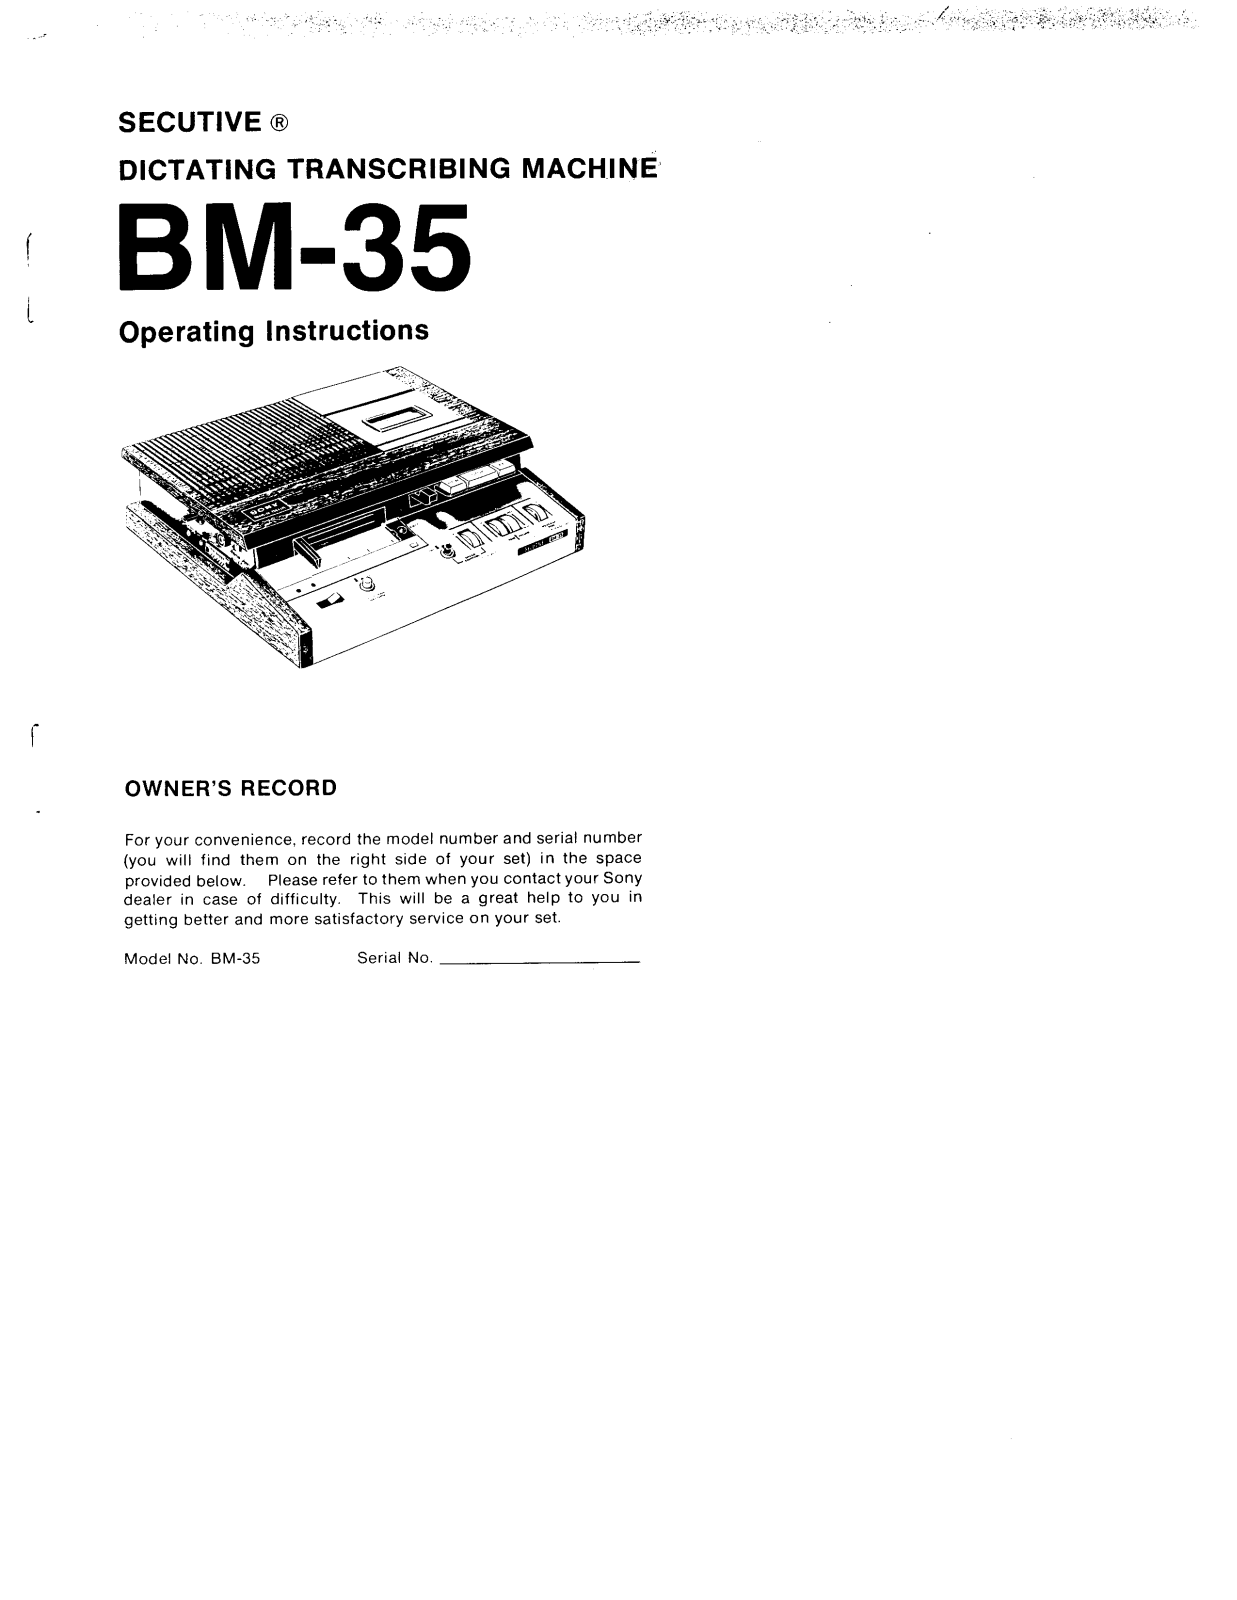 Sony BM-35 User Manual